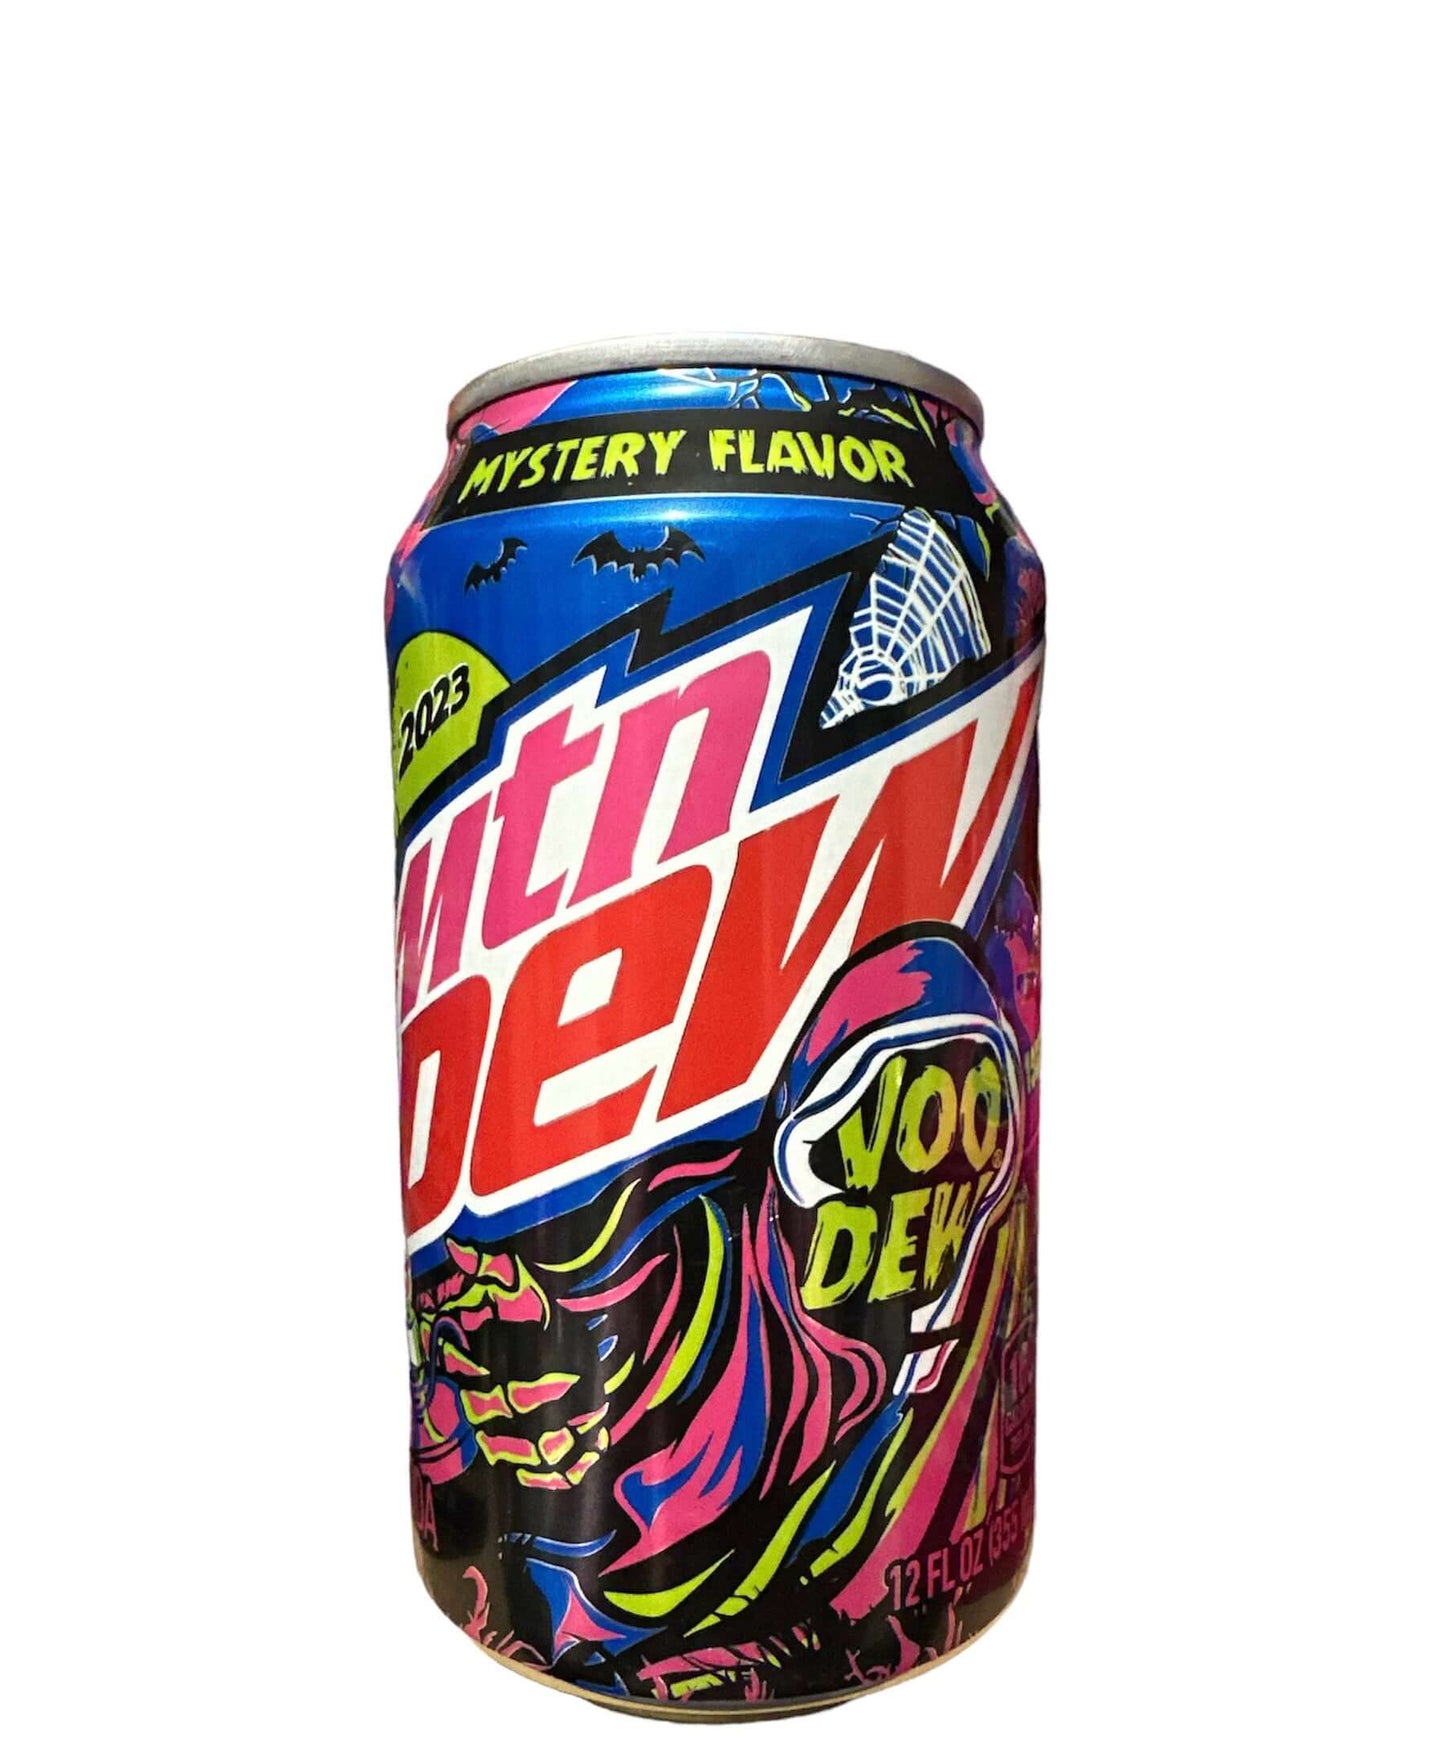 Mtn Dew Mystery Flavor